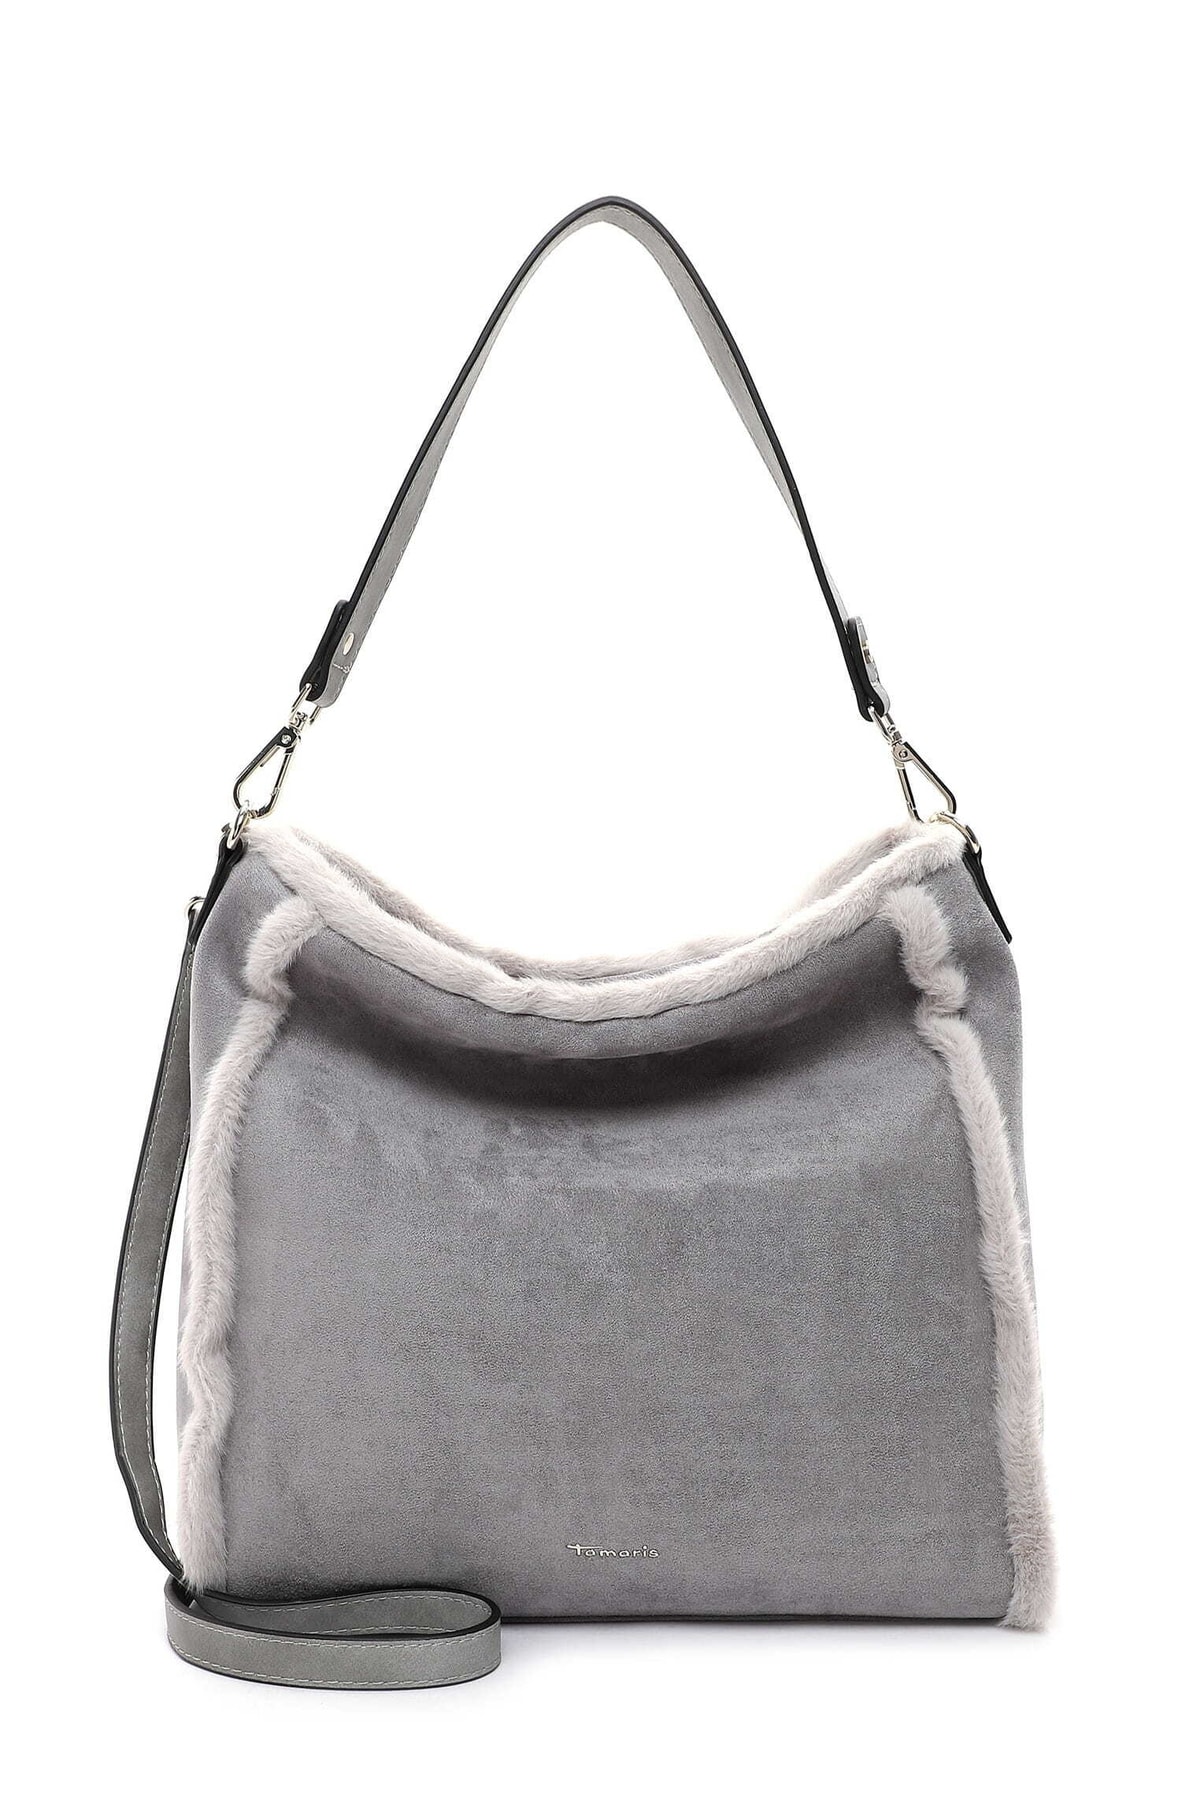 Tamaris Handtasche Grau Strukturiert Fast ausverkauft